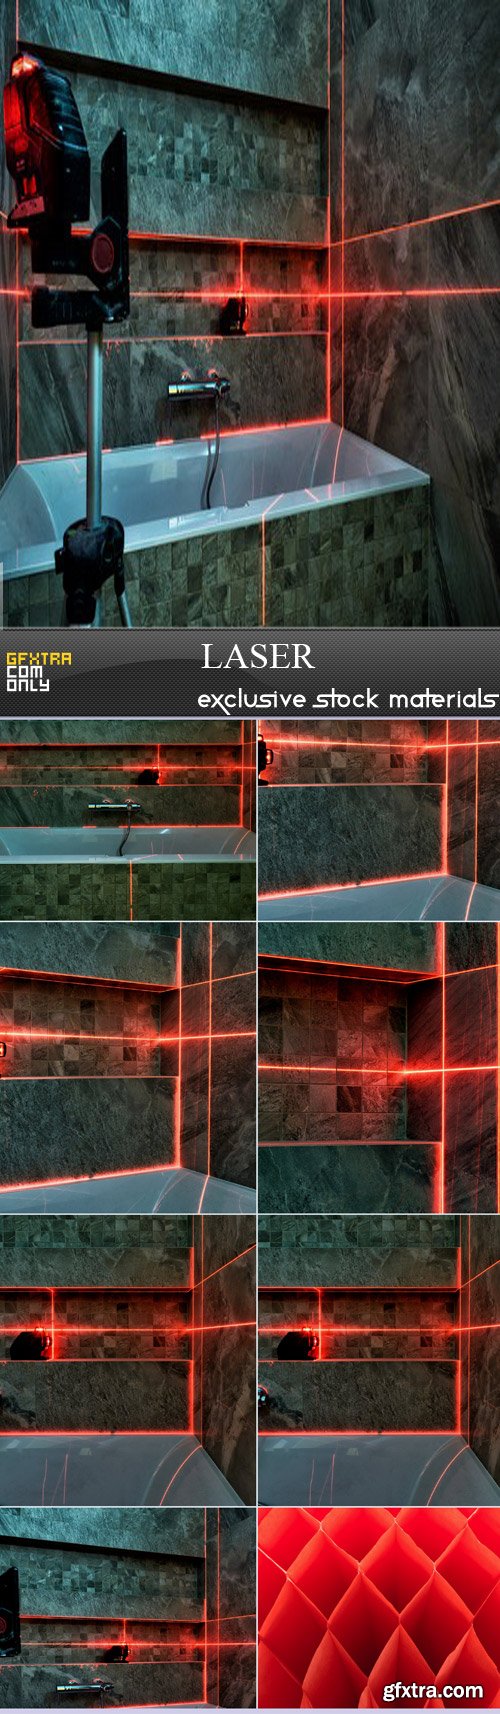 laser - 8 JPEG